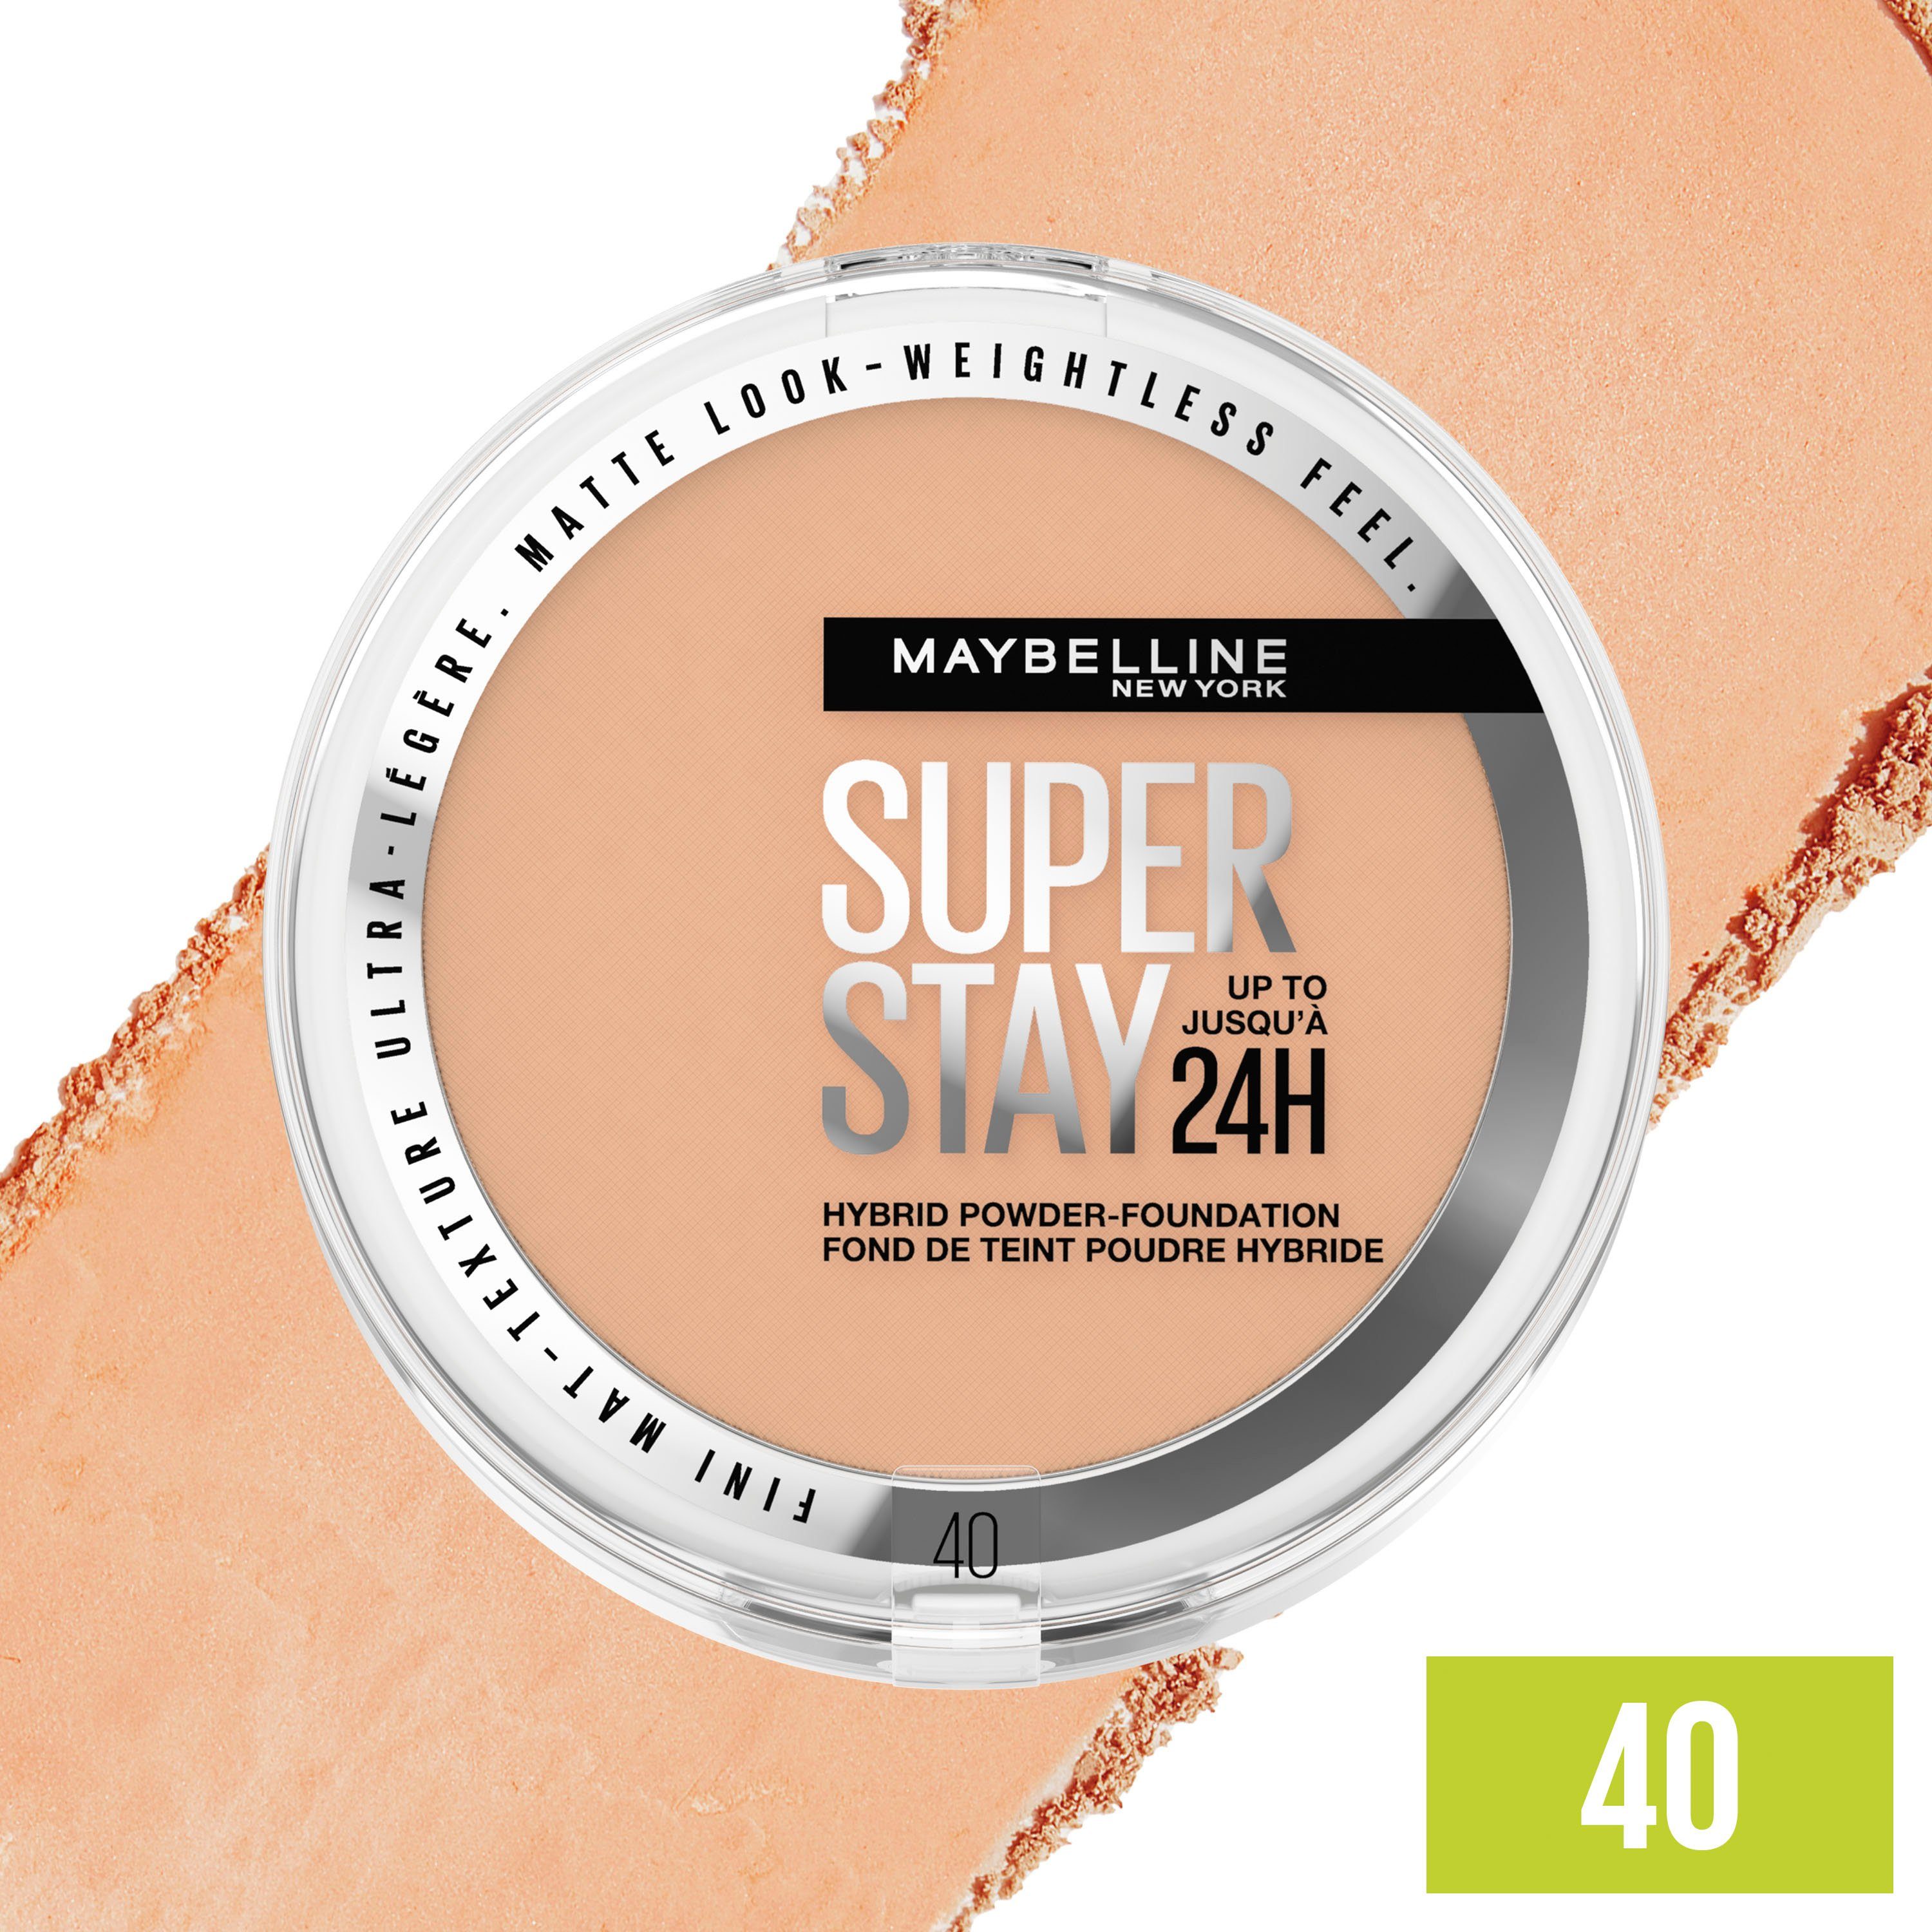 NEW Foundation YORK MAYBELLINE New Make-Up Super Stay Hybrides Puder York Maybelline